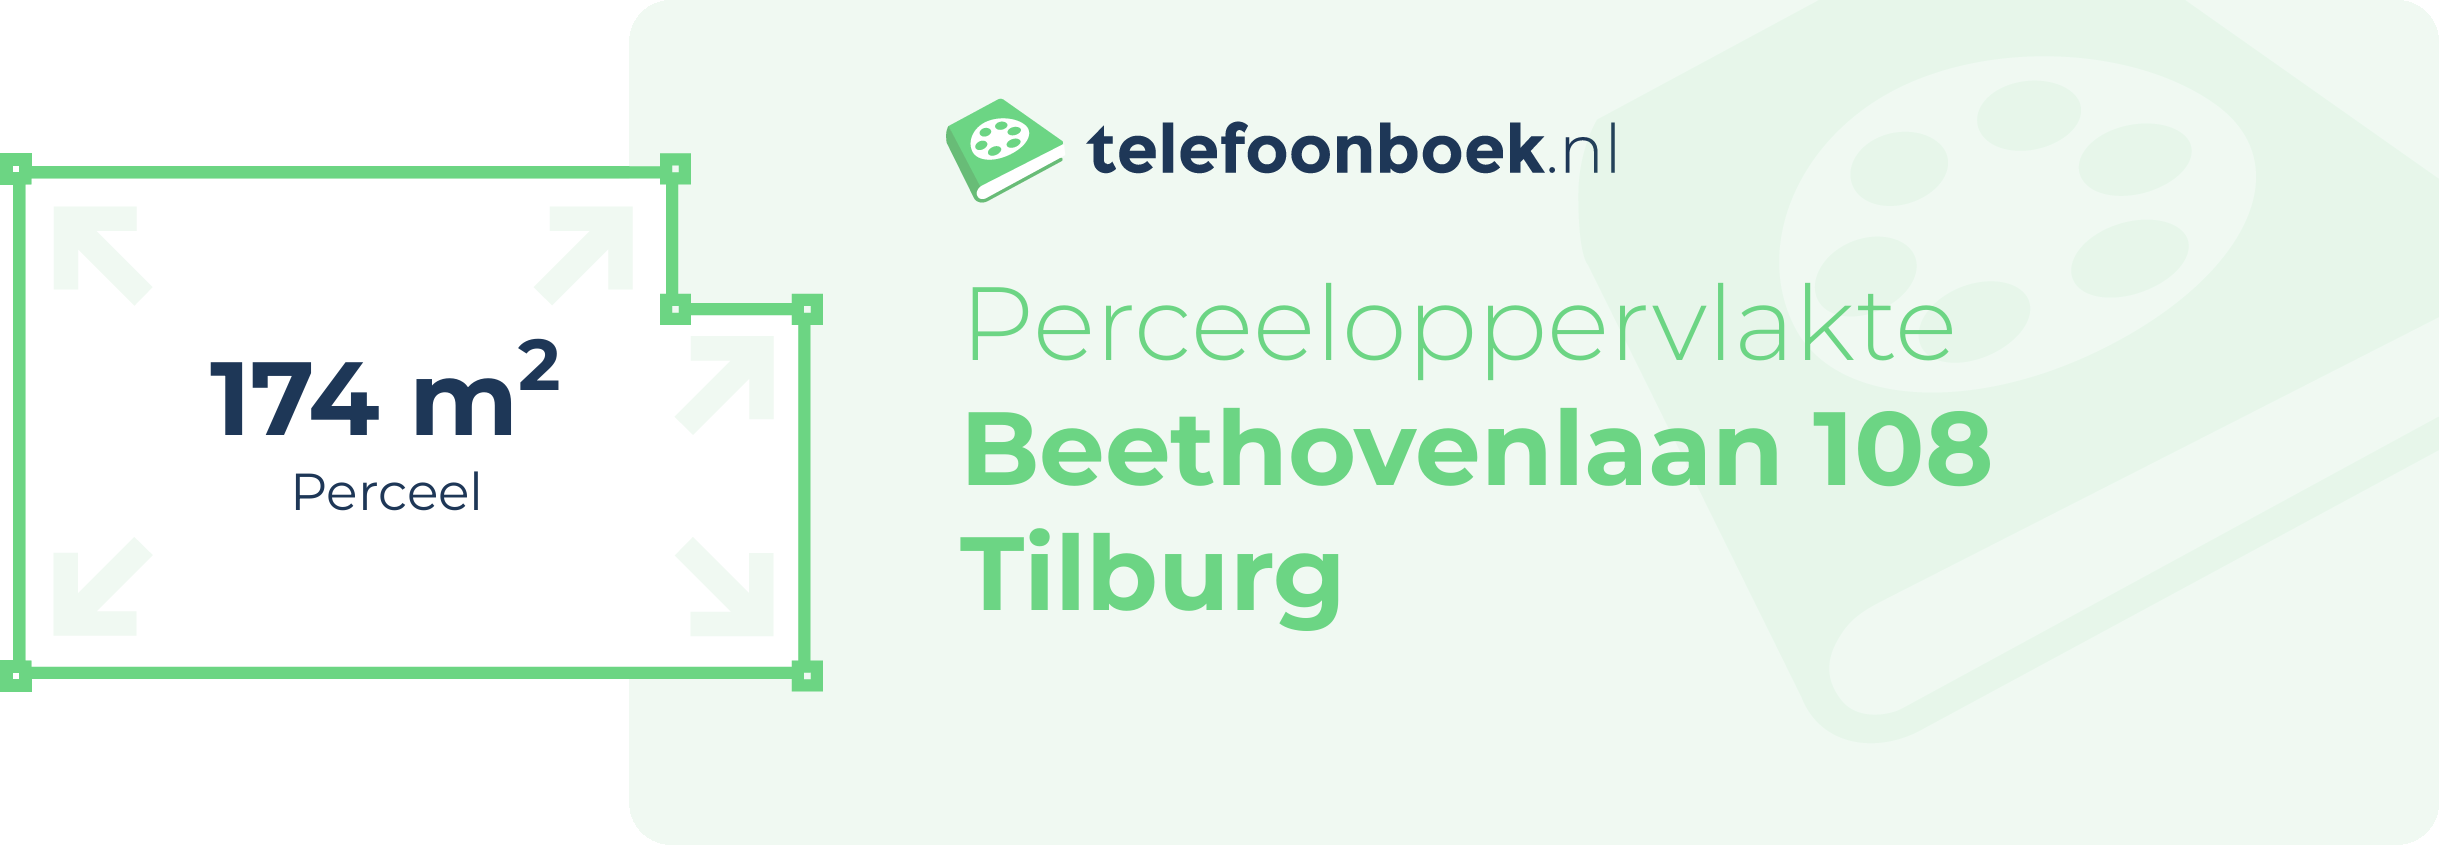 Perceeloppervlakte Beethovenlaan 108 Tilburg